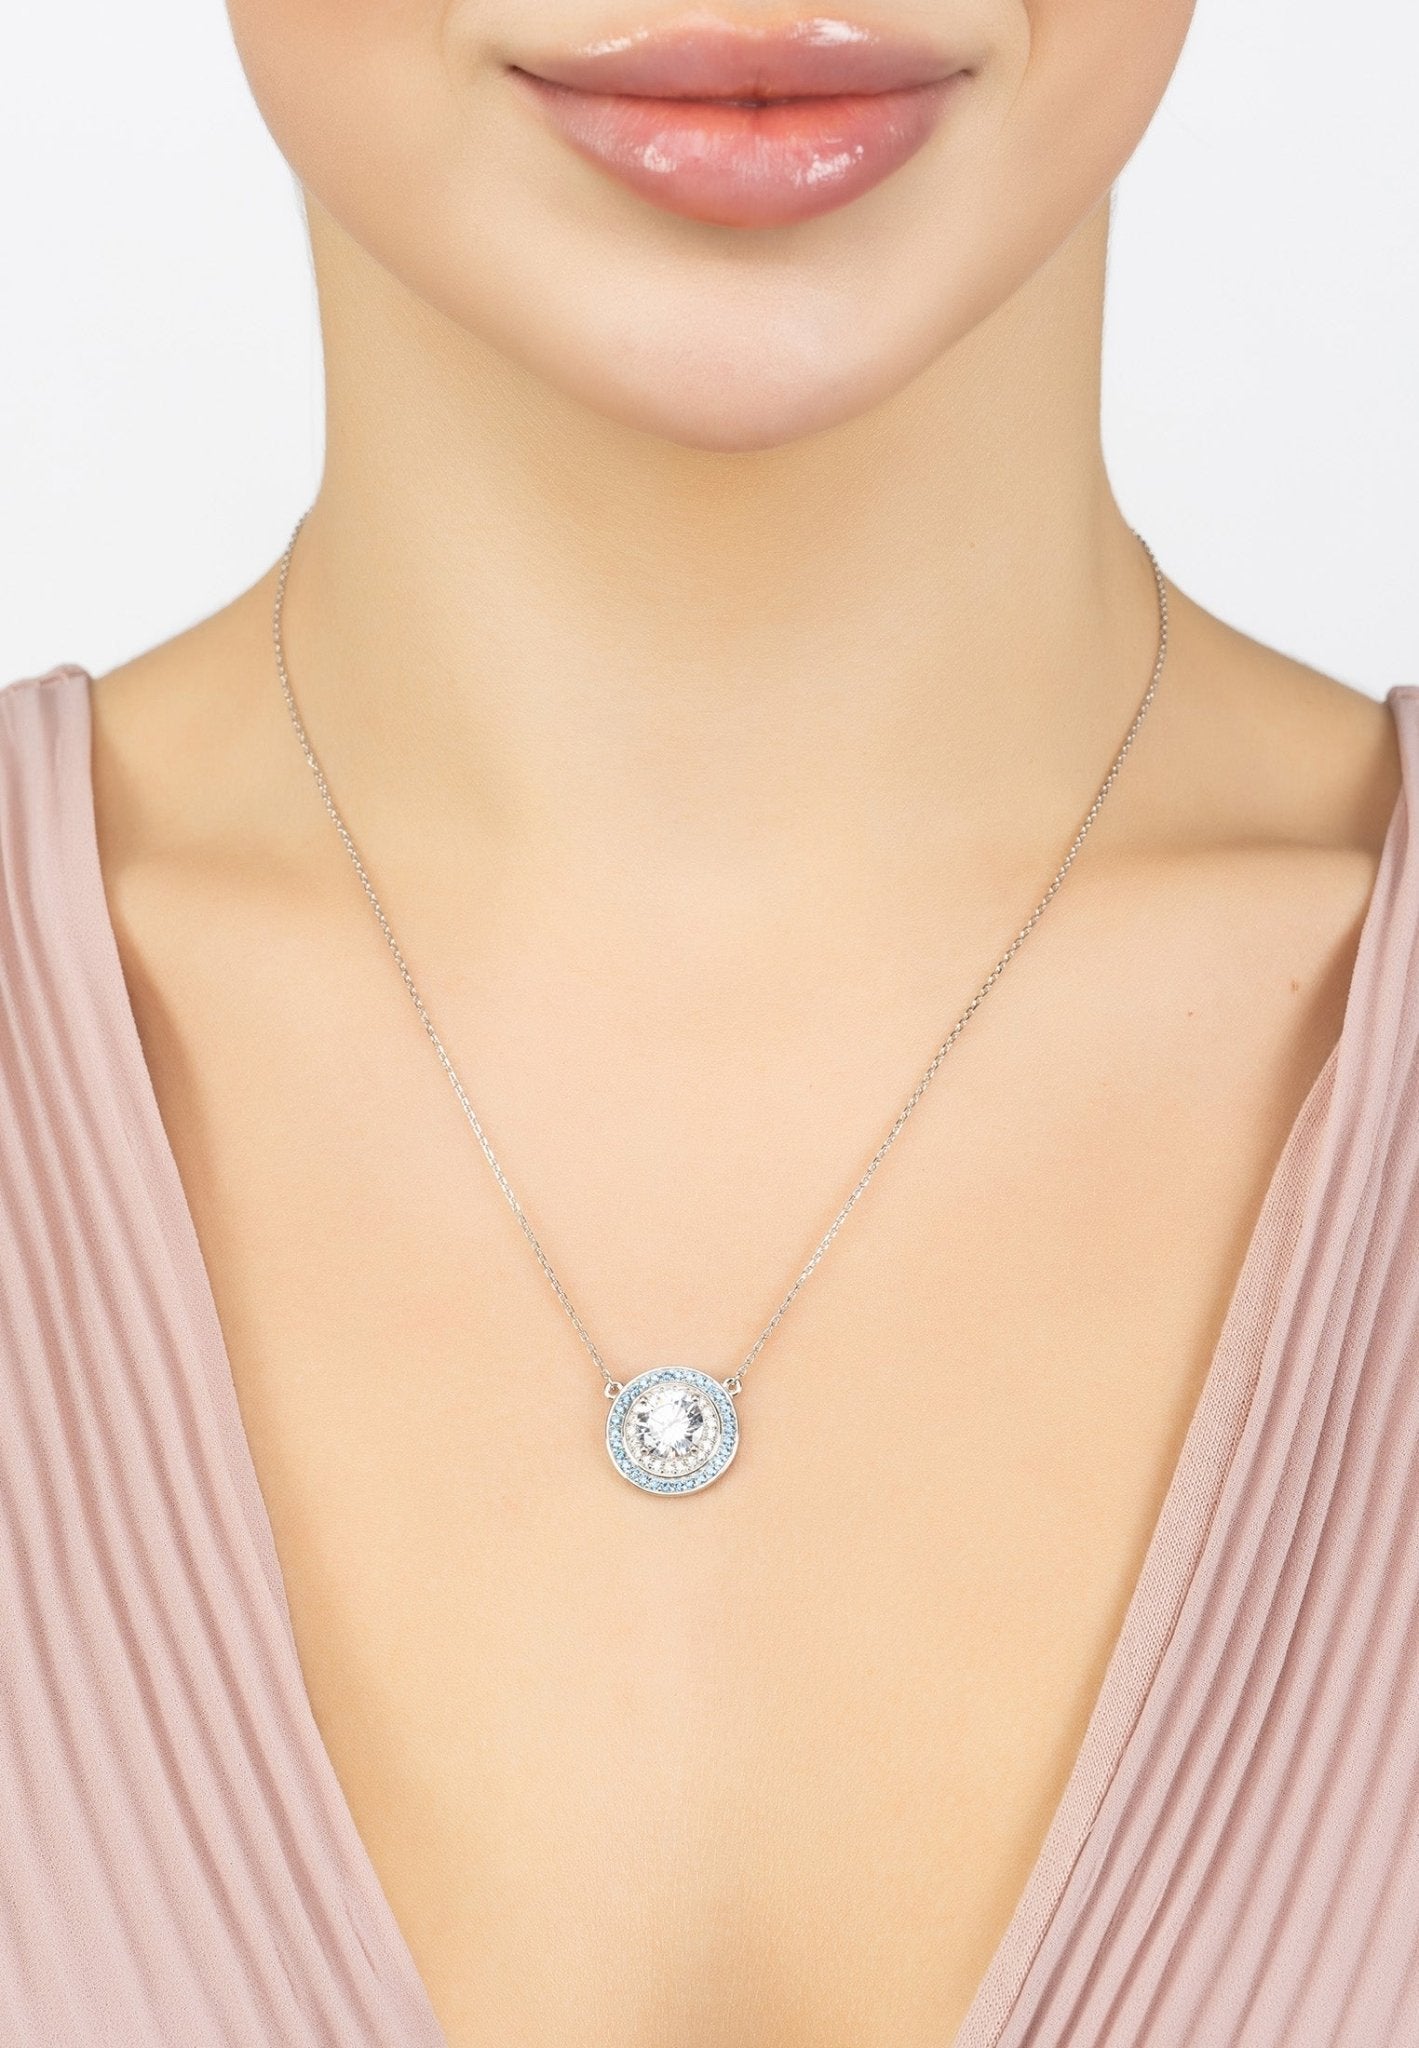 Balmoral Pendant Necklace Topaz Blue Cz Silver - LATELITA Necklaces